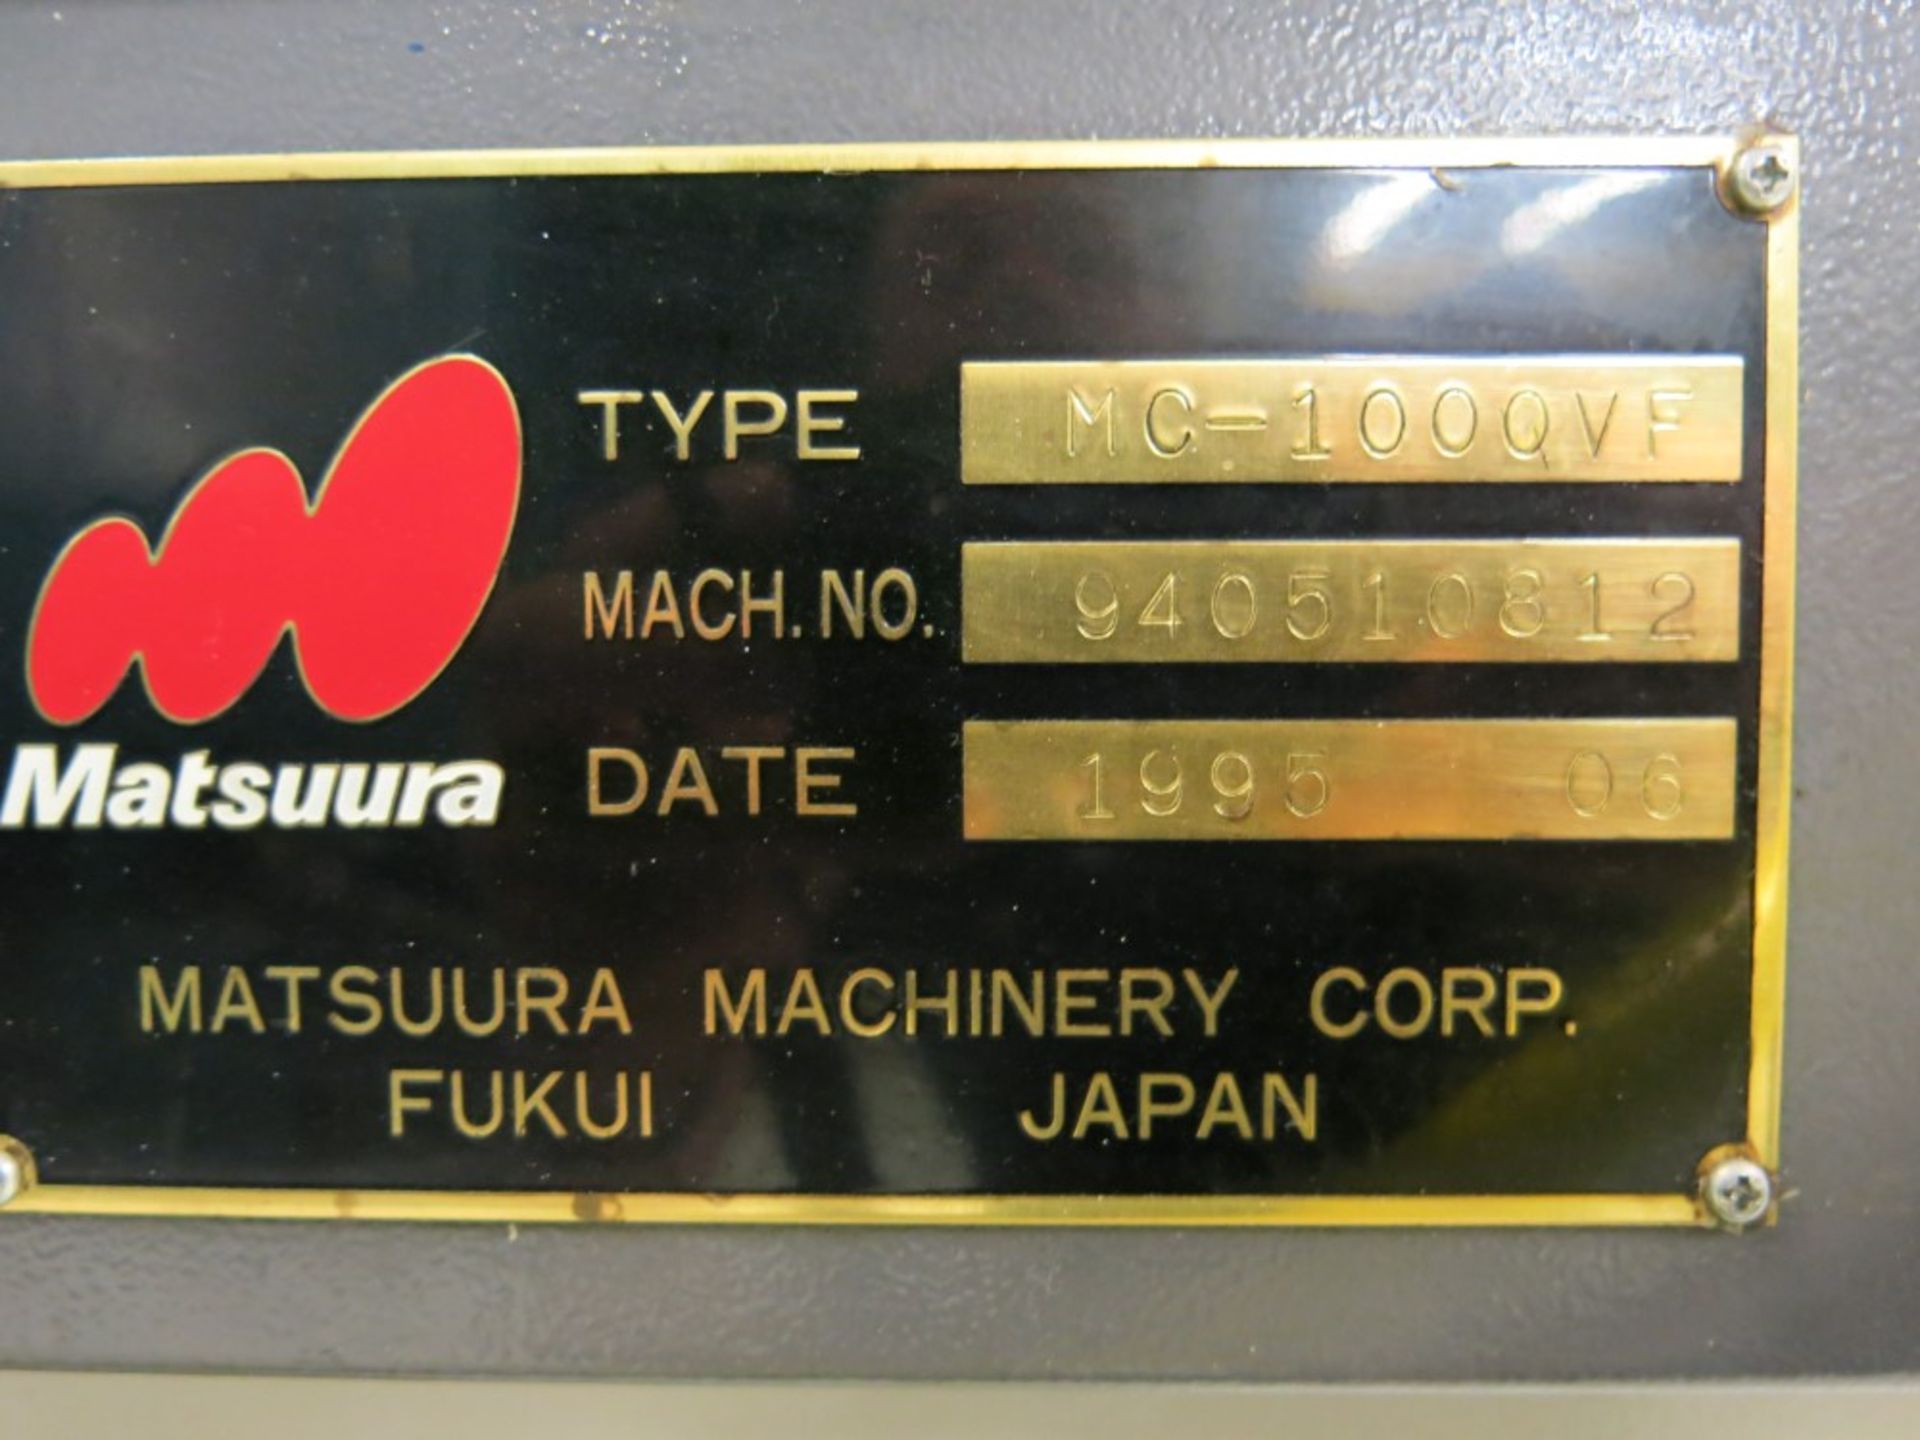 1995 Matsuura CNC Machining Center Mod MC-1000VF - Image 6 of 6